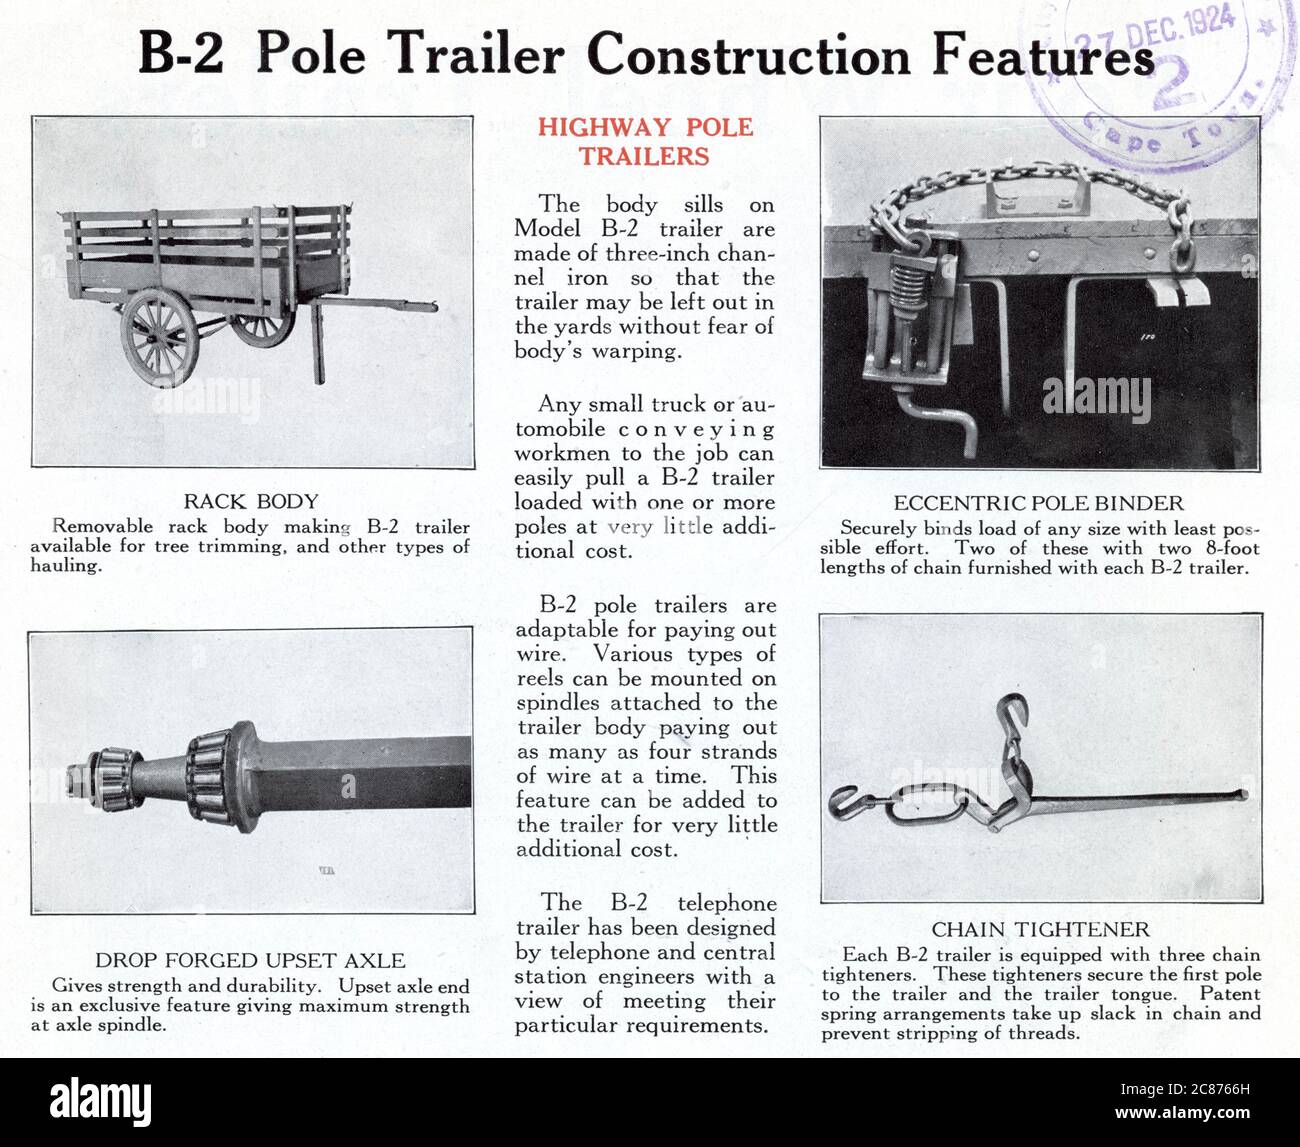 Modell B-2-polige Anhängerkonstruktion Merkmale - Zahnstange, exzentrischer Polbinder, gesenkgeschmiedete Achse, Kettenspanner. Stockfoto